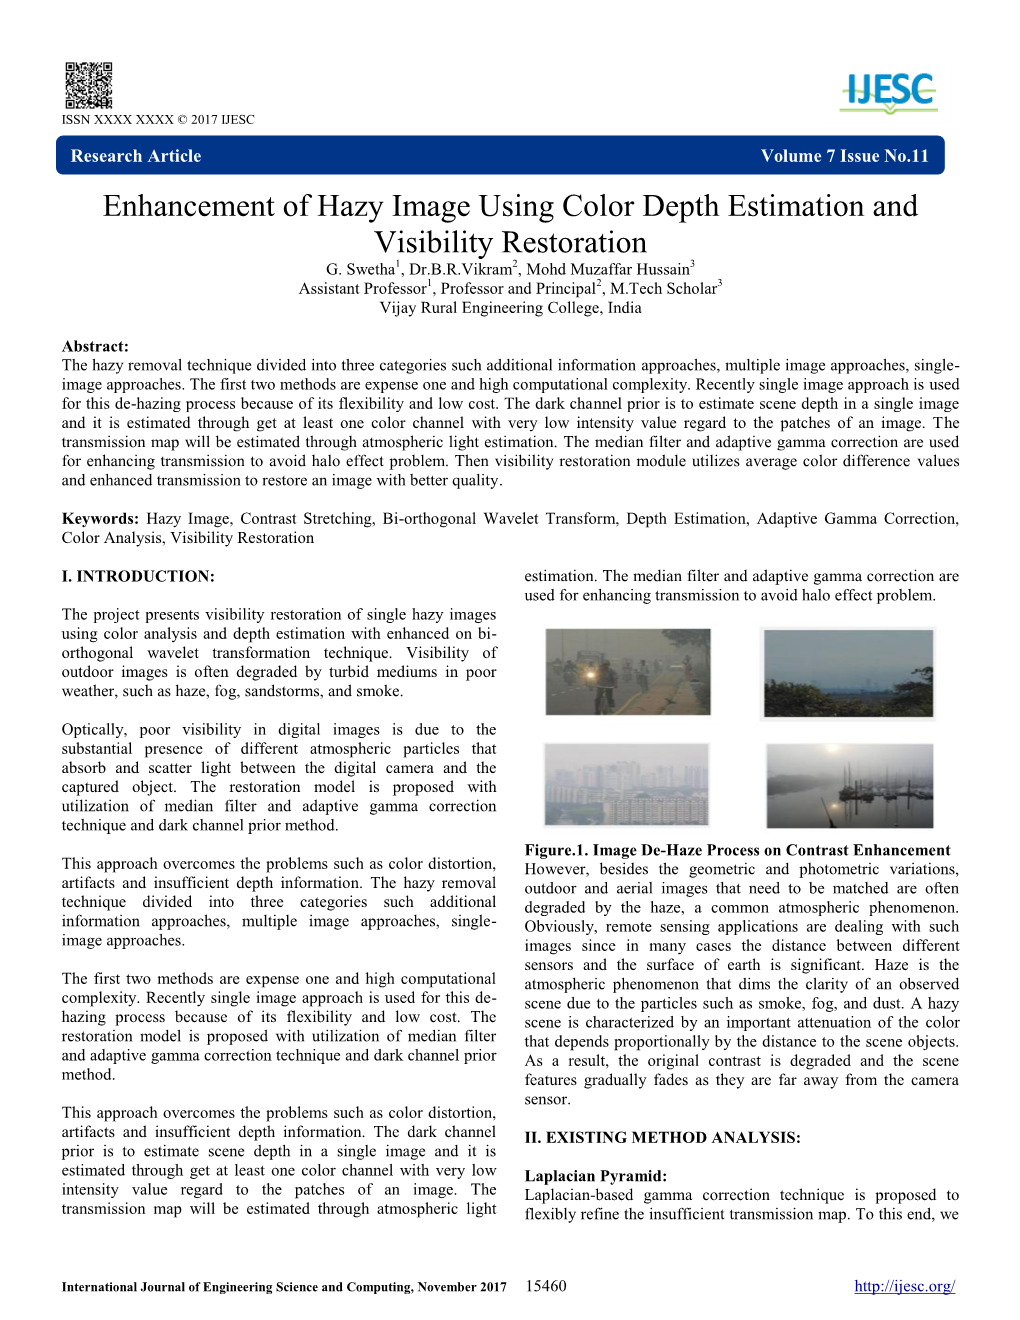 Enhancement of Hazy Image Using Color Depth Estimation and Visibility Restoration G